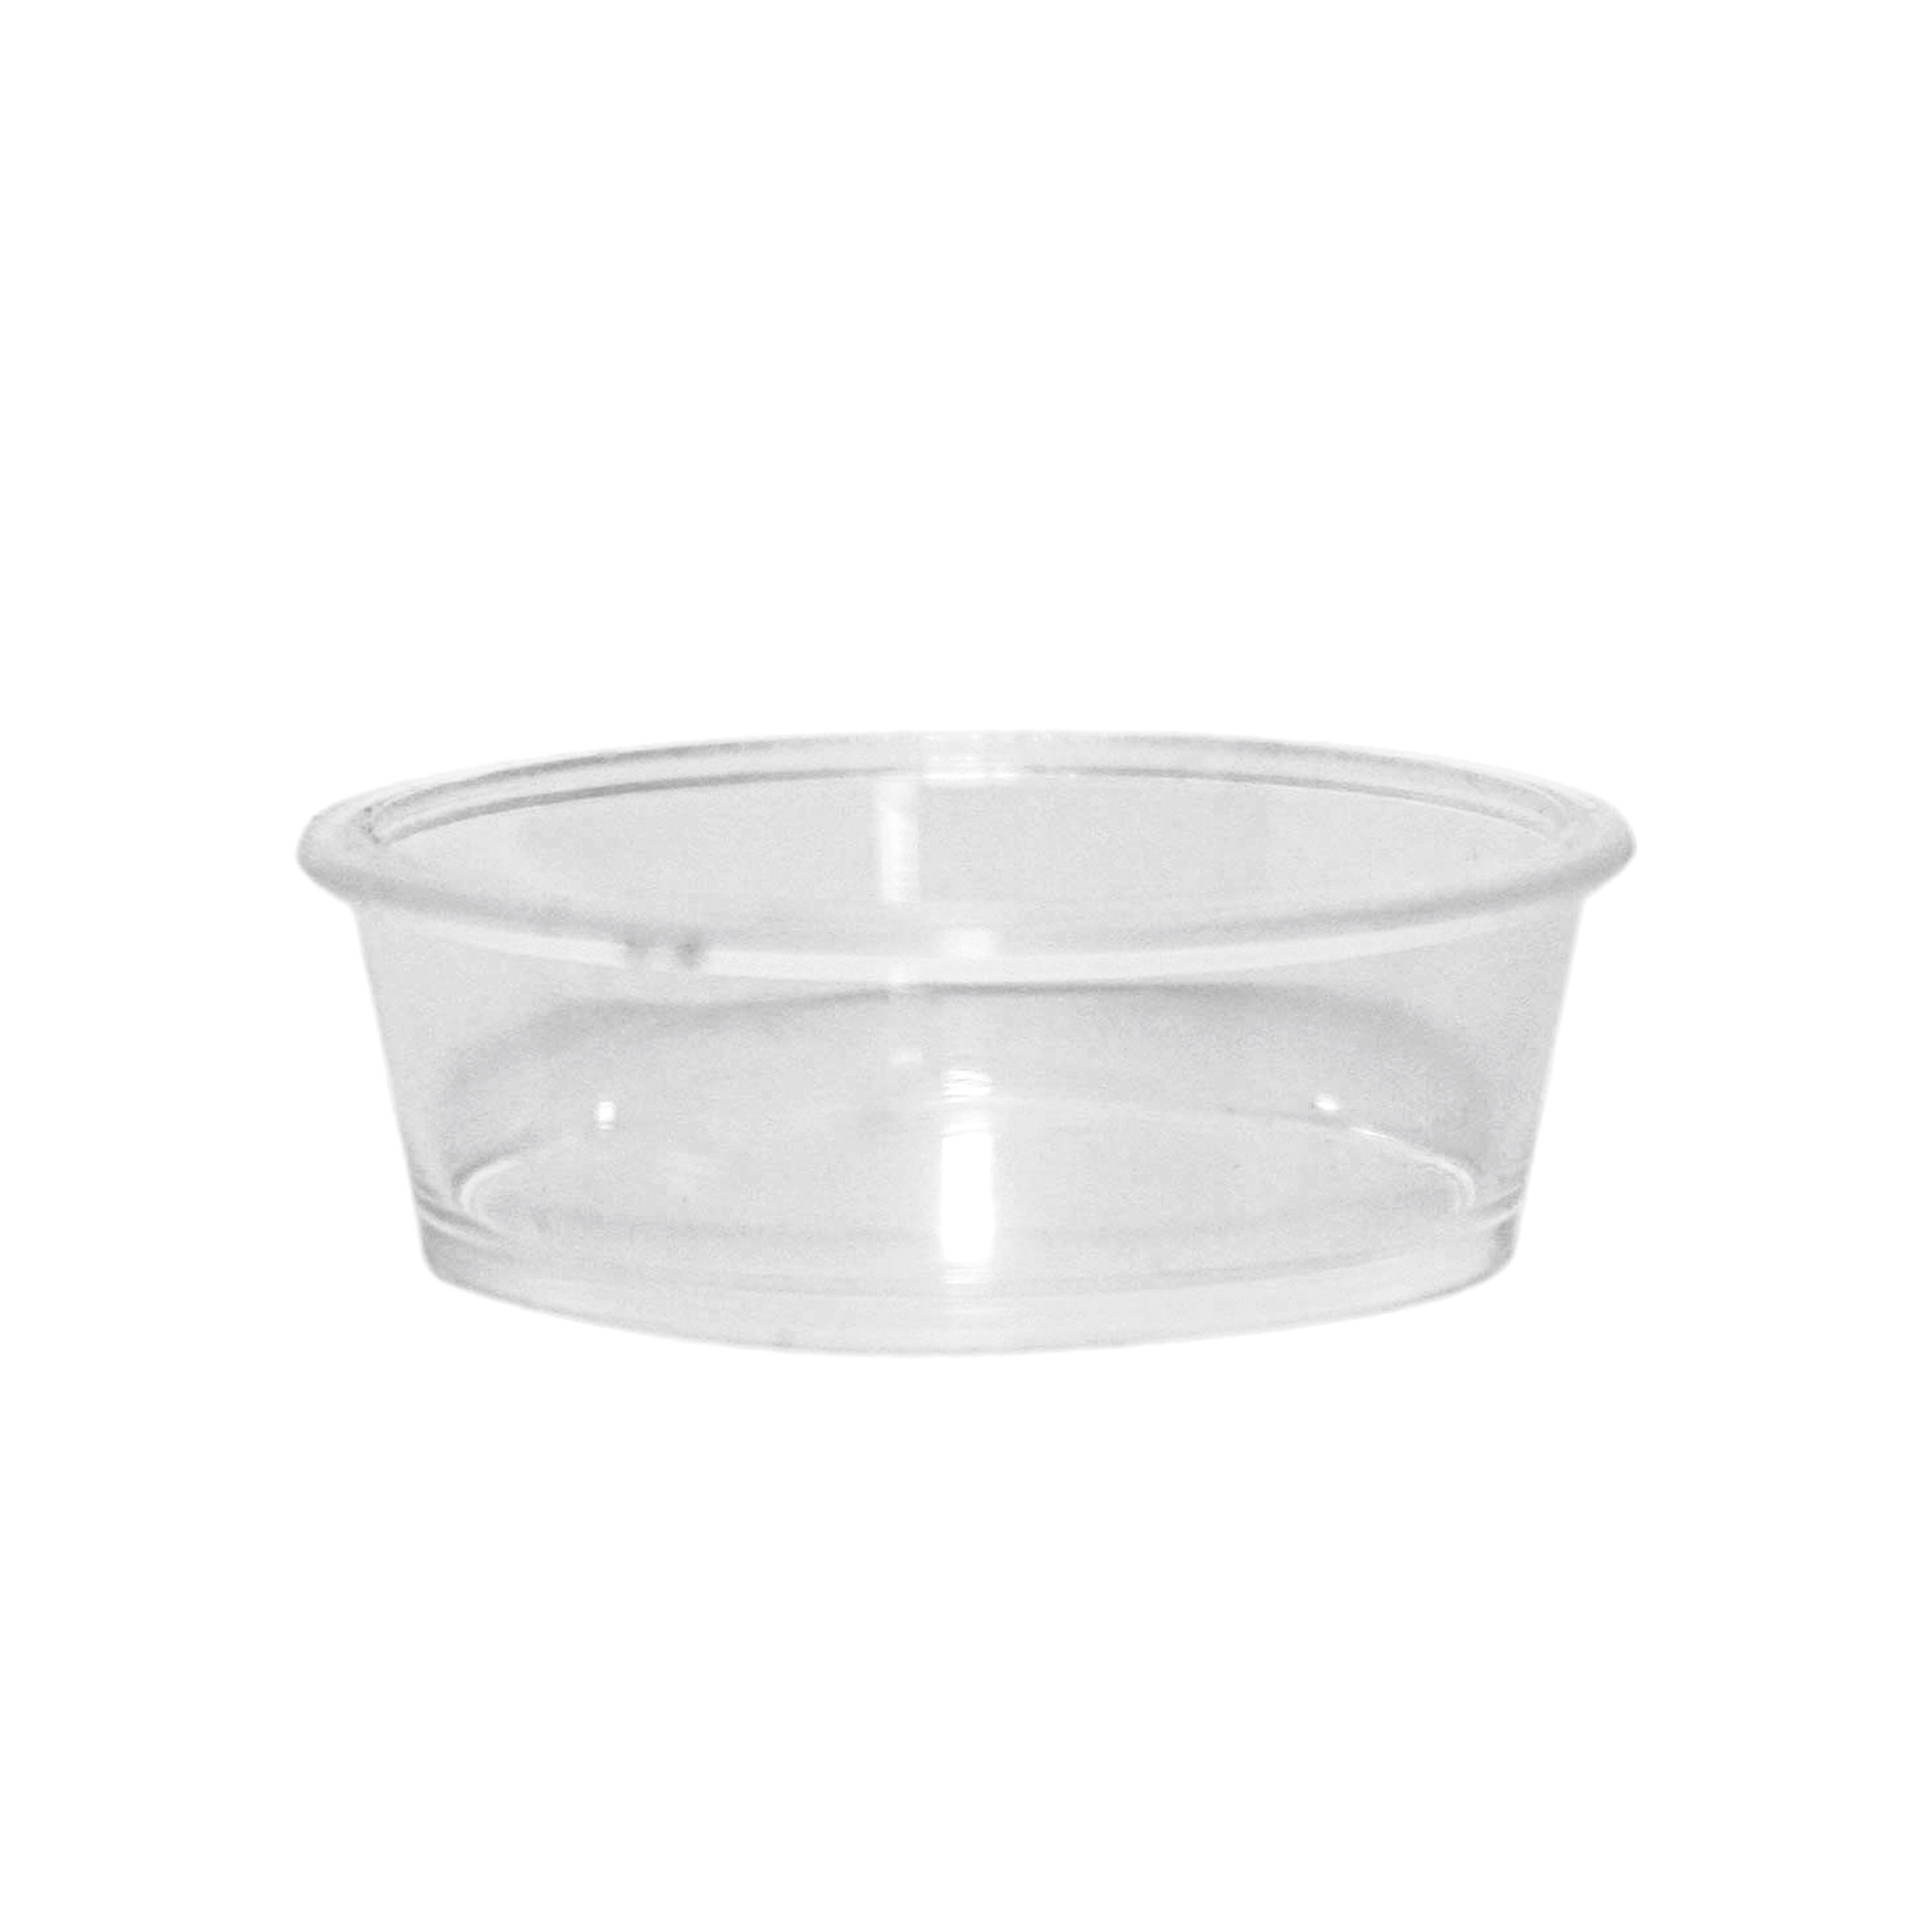 Disposable plastic container for Eyelash Laminator 1 pc